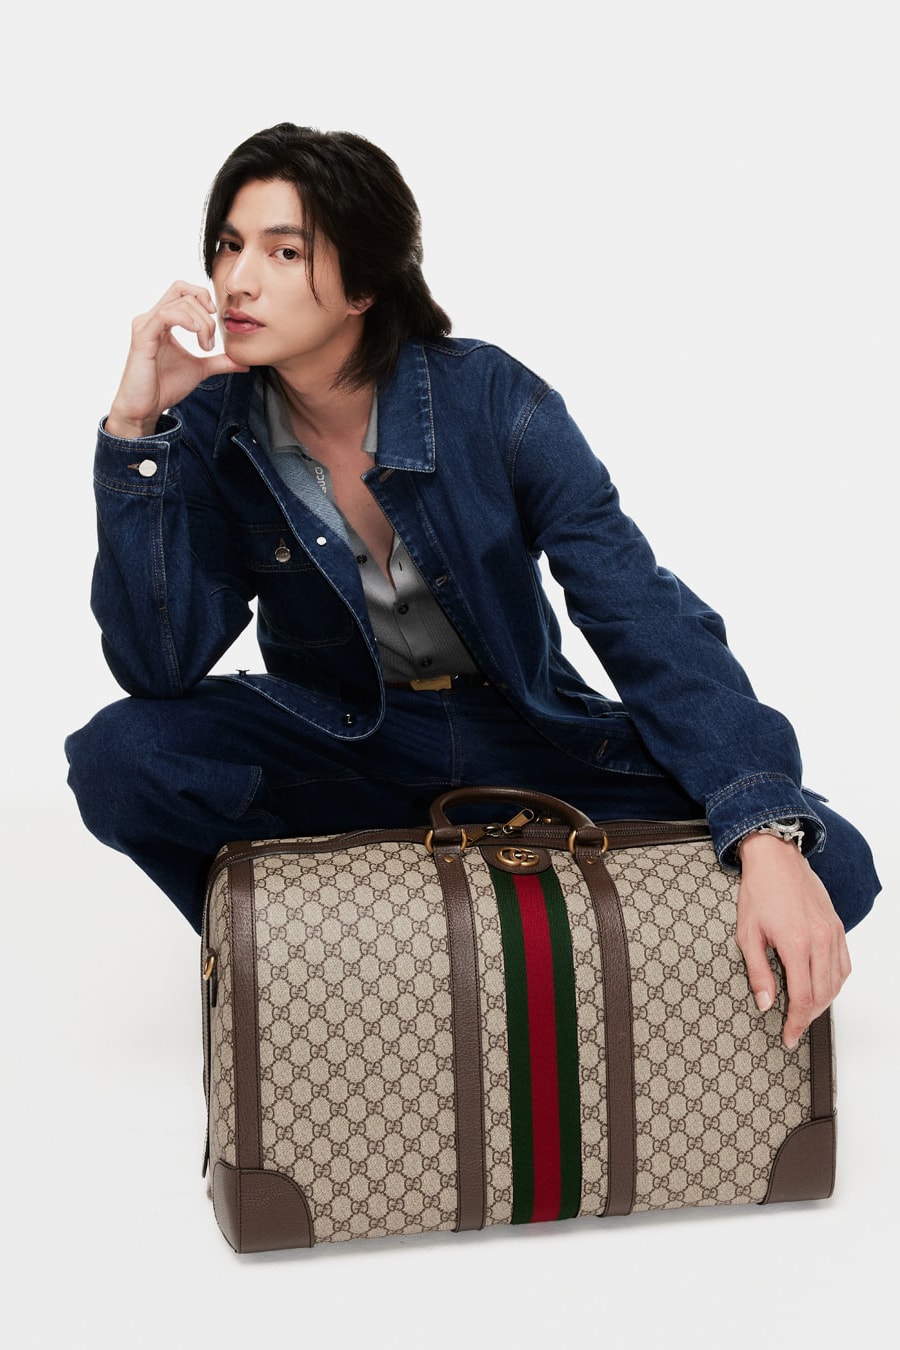 Gucci 宣佈 Gulf Kanawut Traipipattanapong 成為品牌代言人